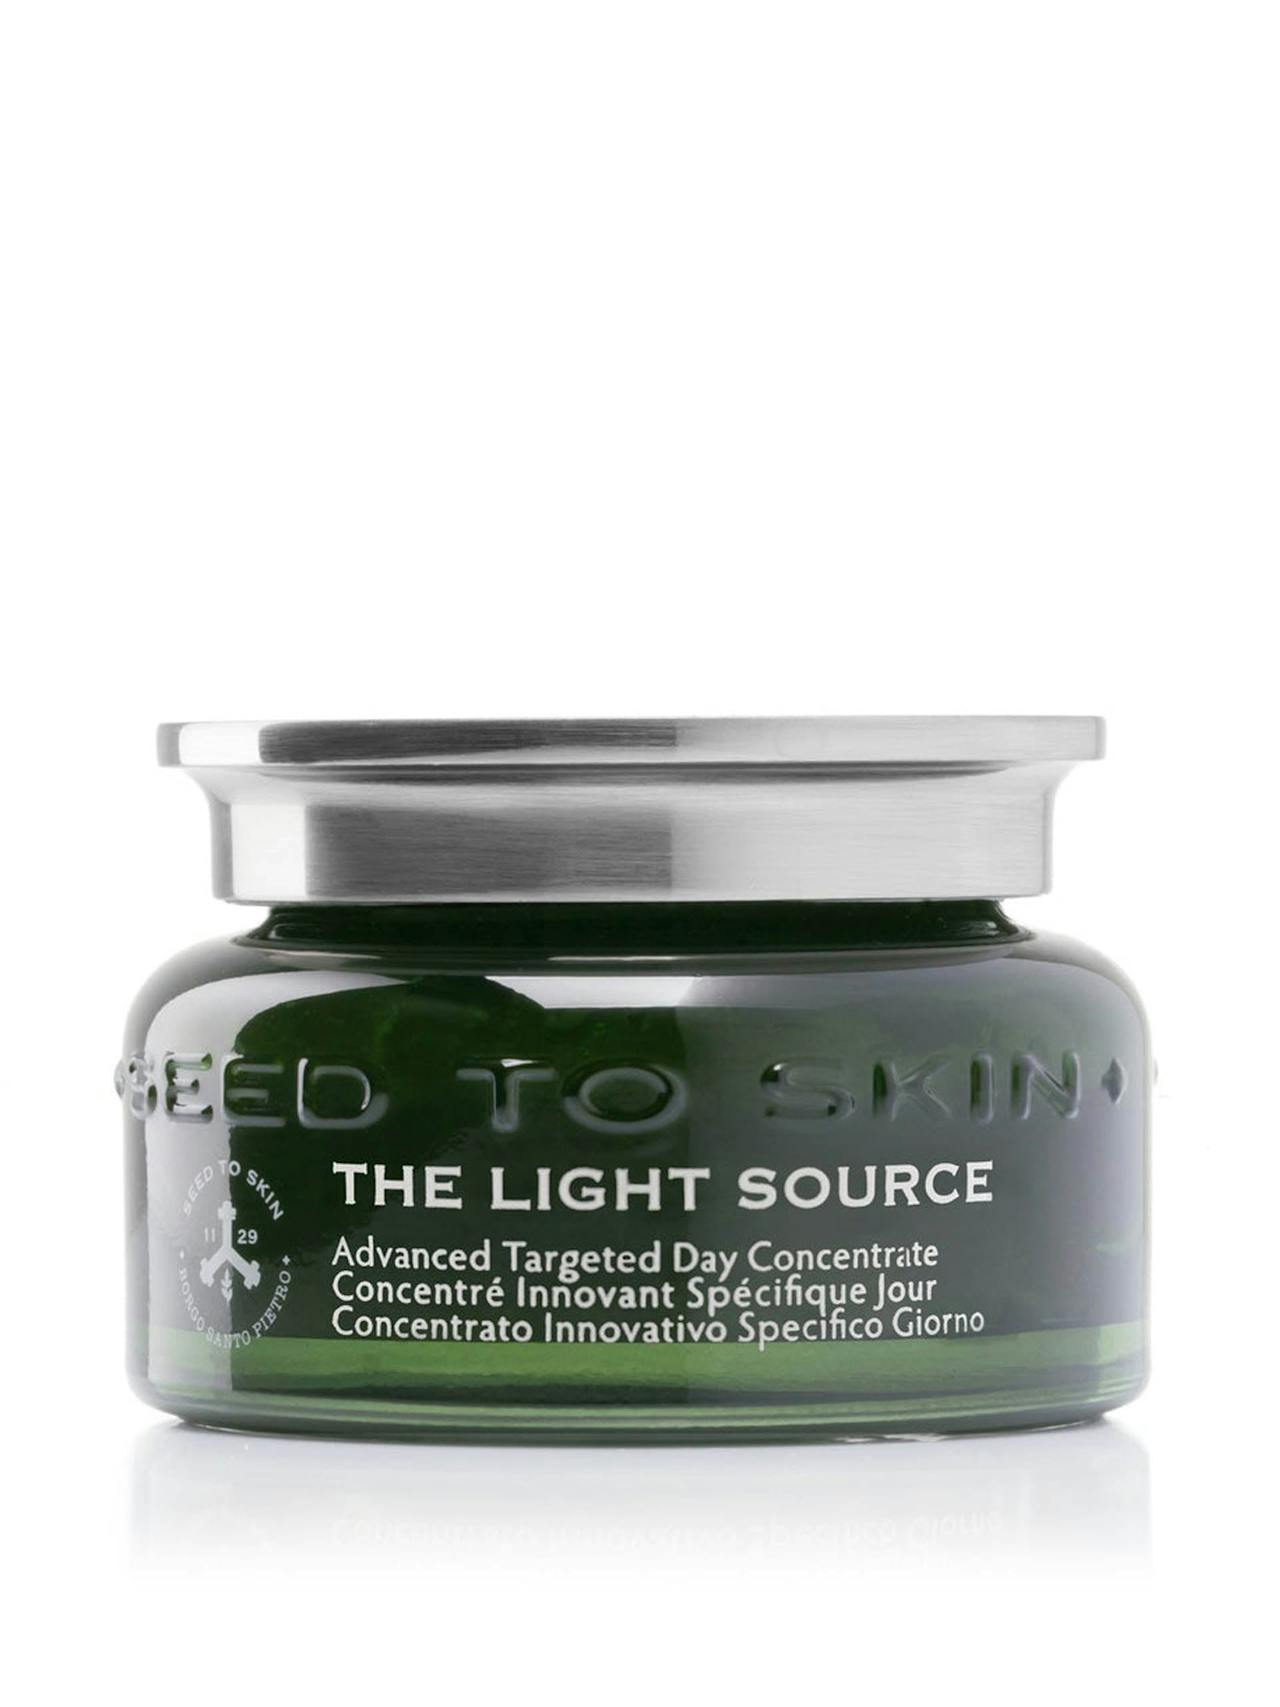 The Light Source moisturiser